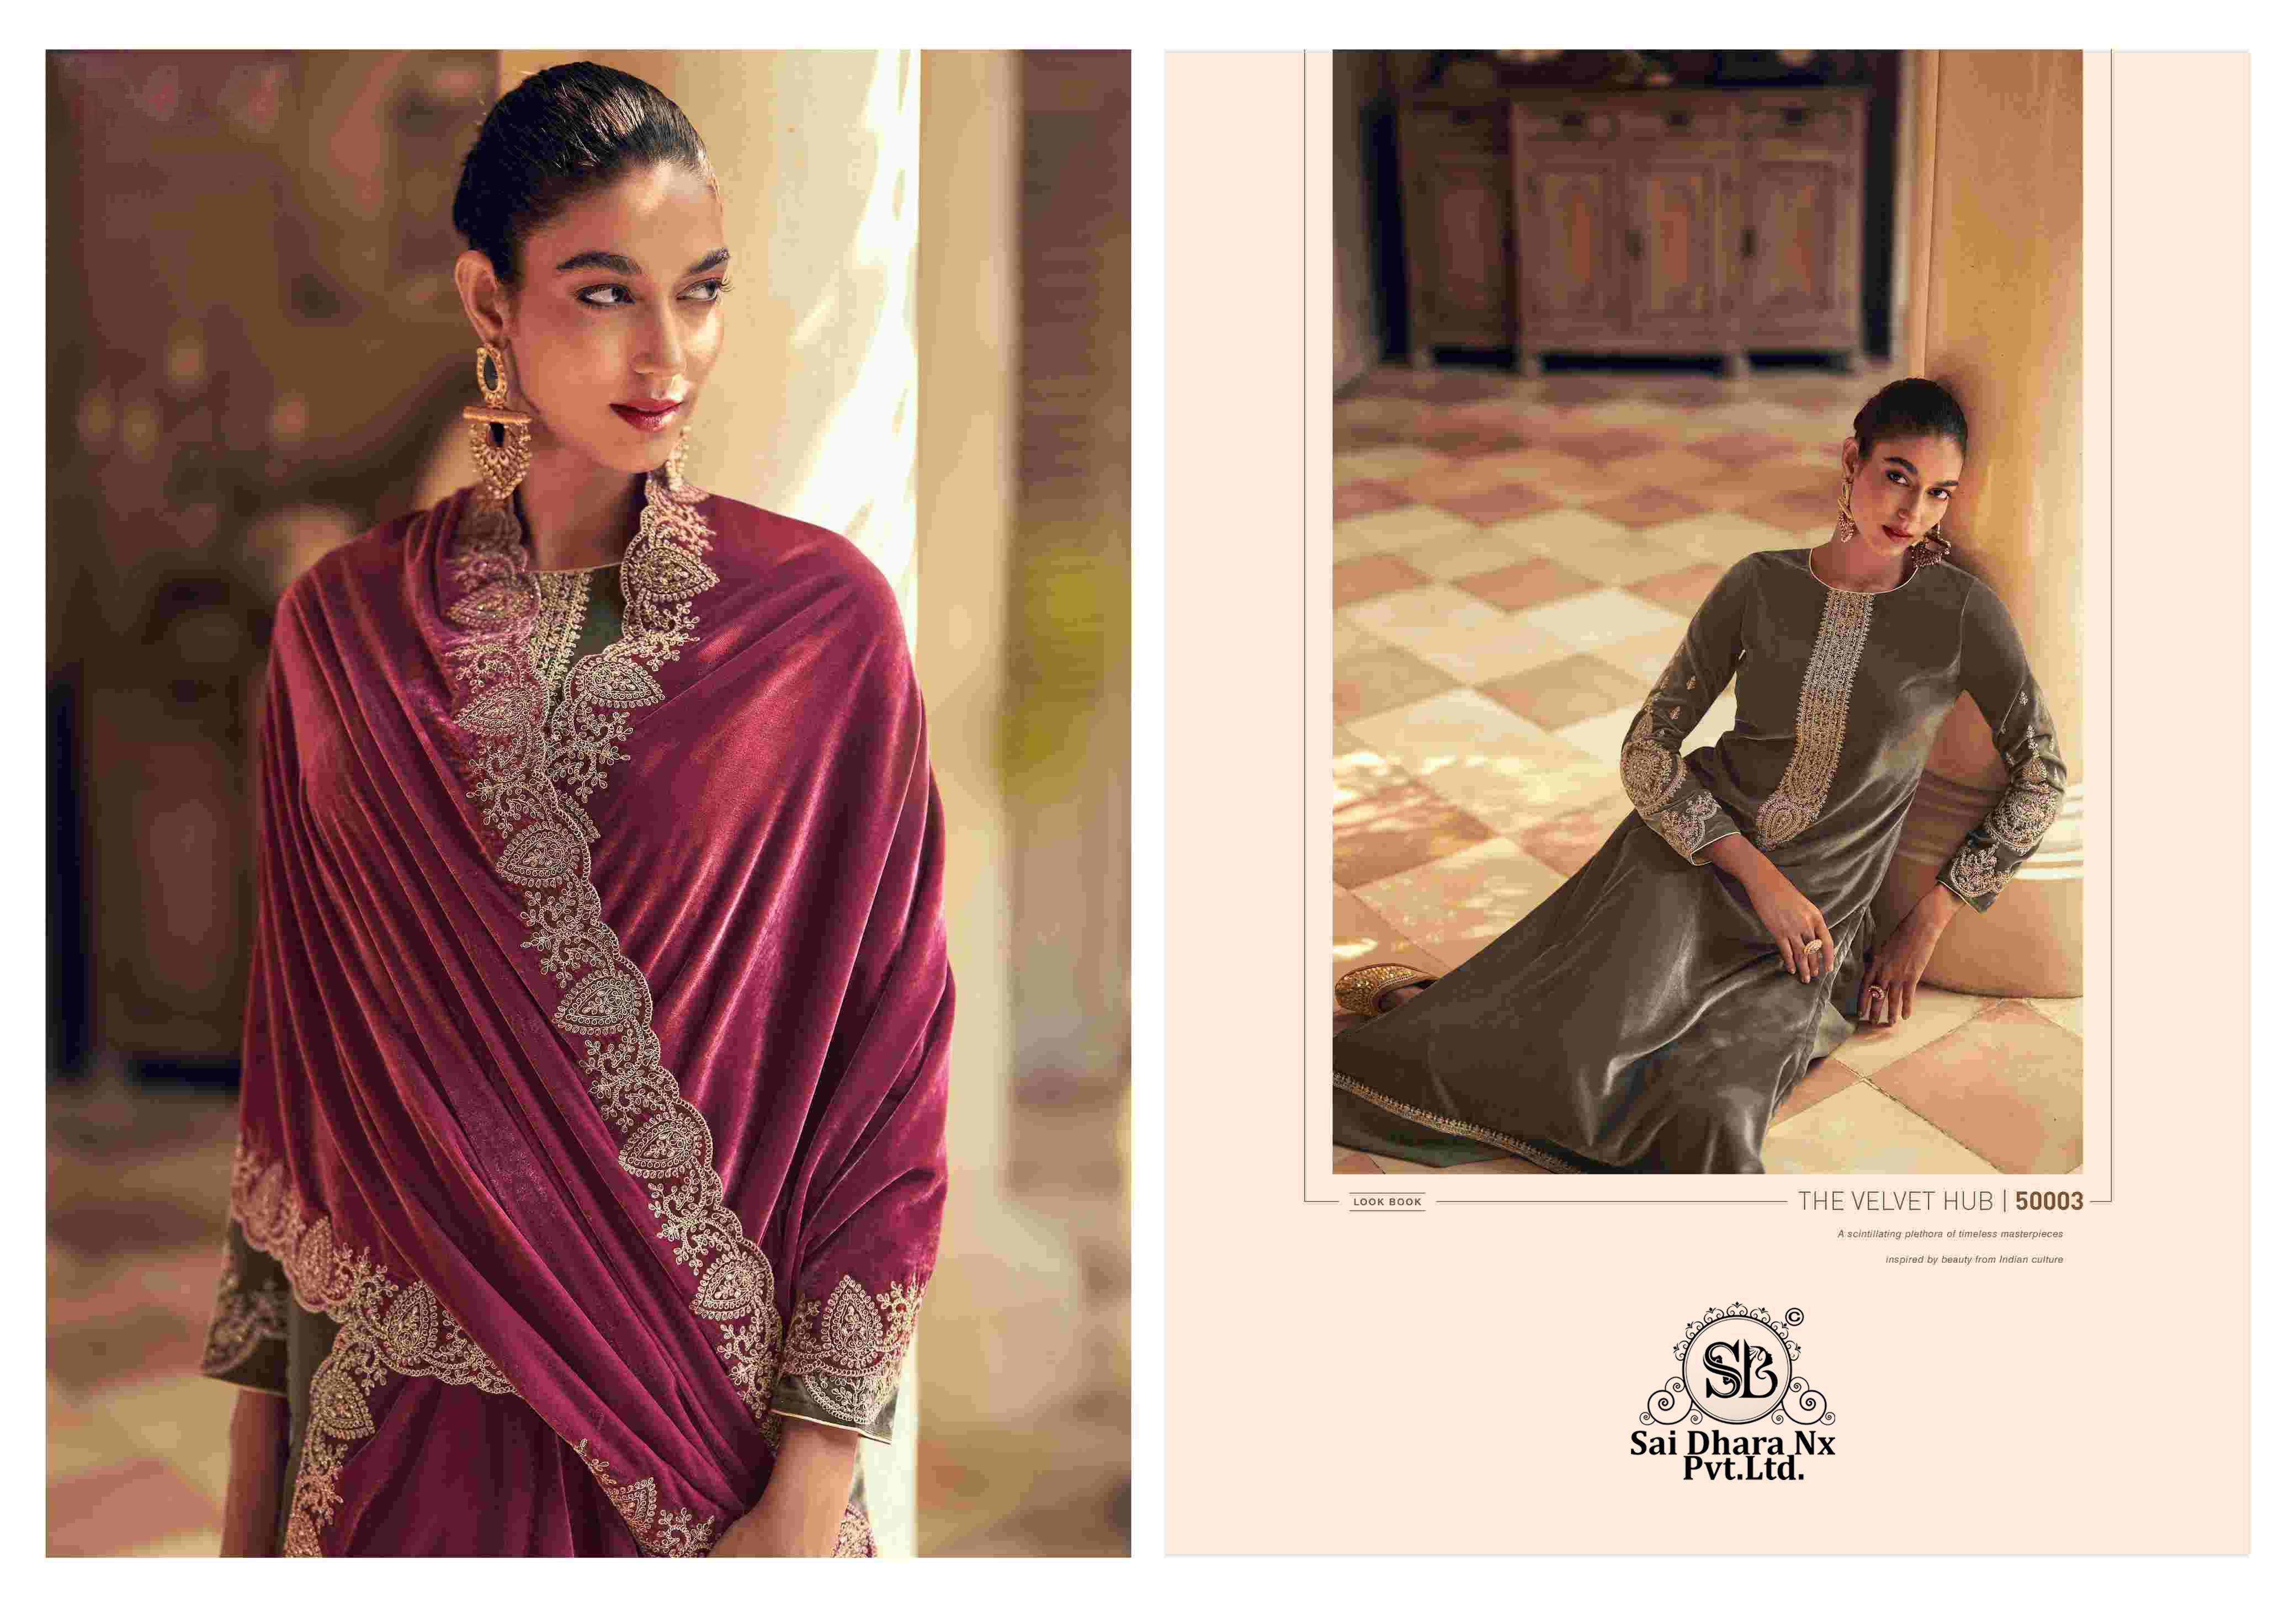 mumtaz arts presents the velvet hub pakistani suit wholesale shop in surat - SaiDharaNx